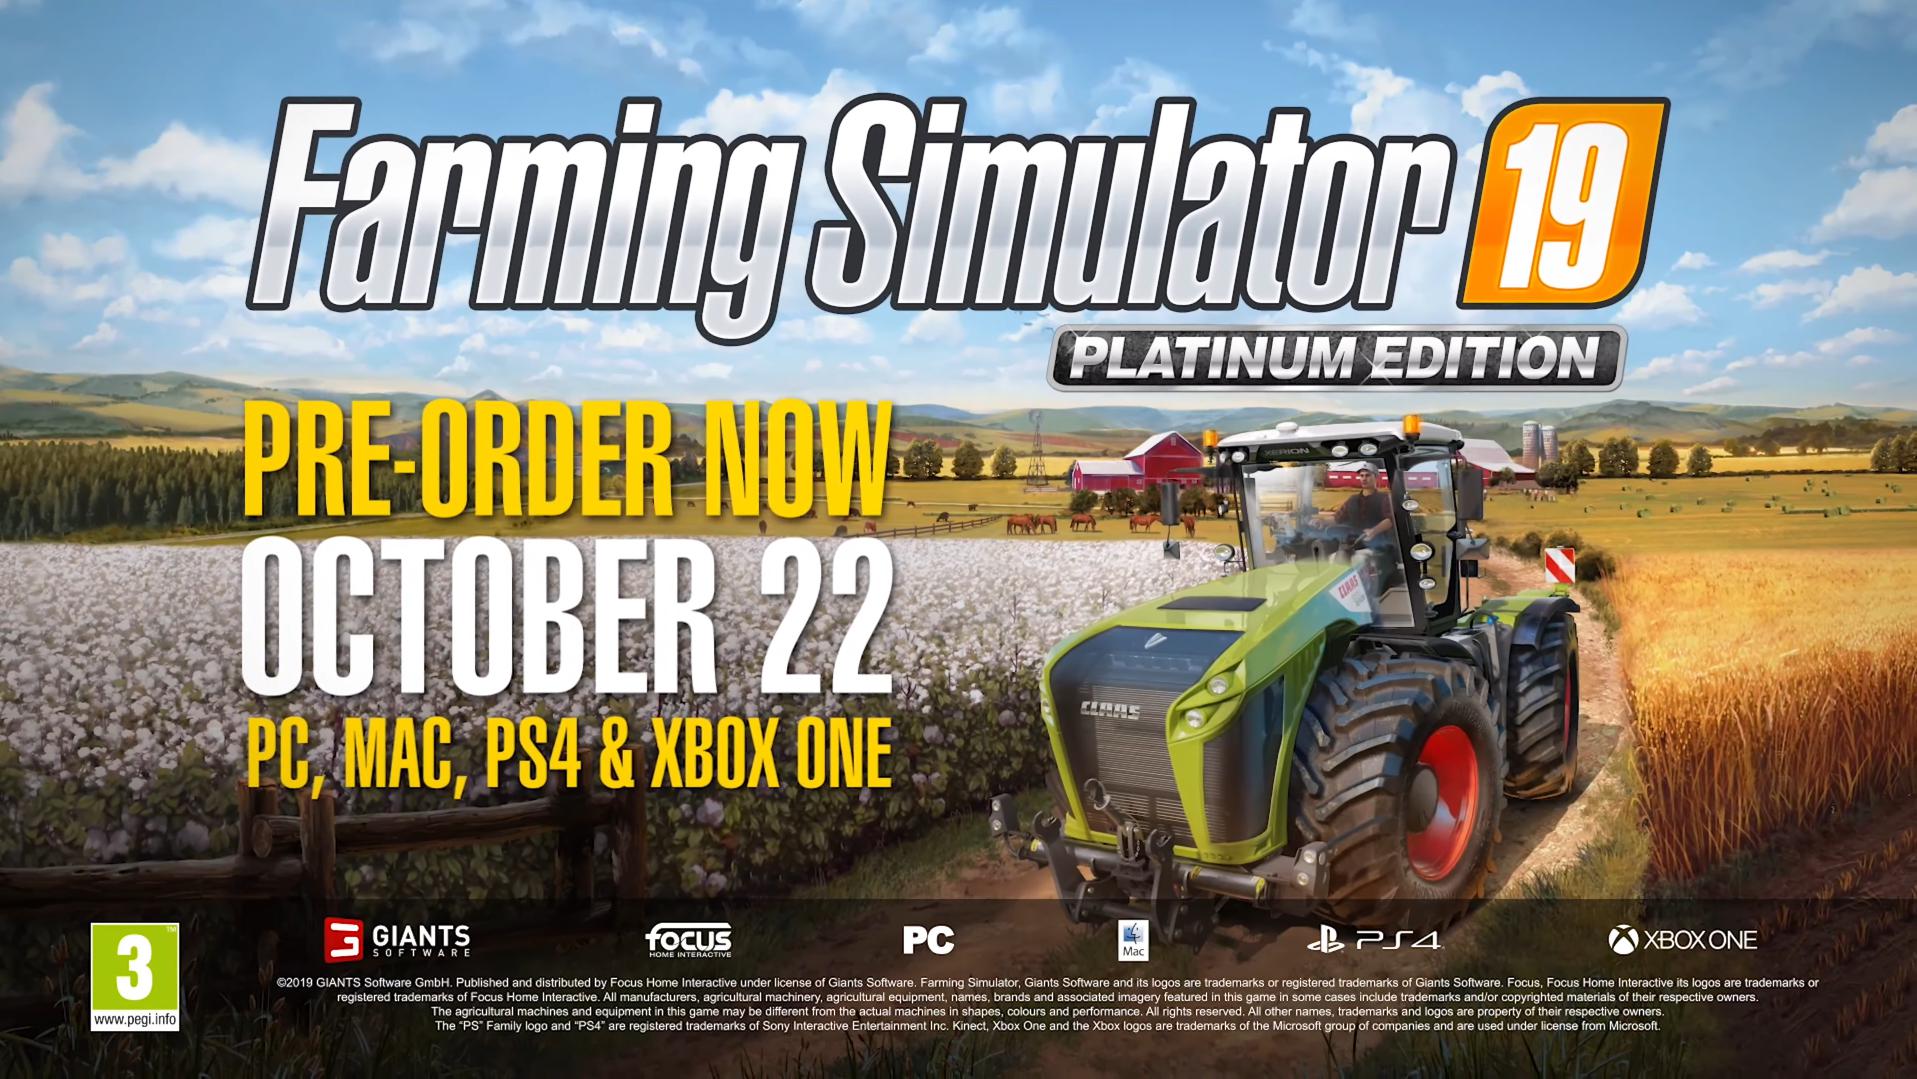 farming simulator 2019 download free pc full game